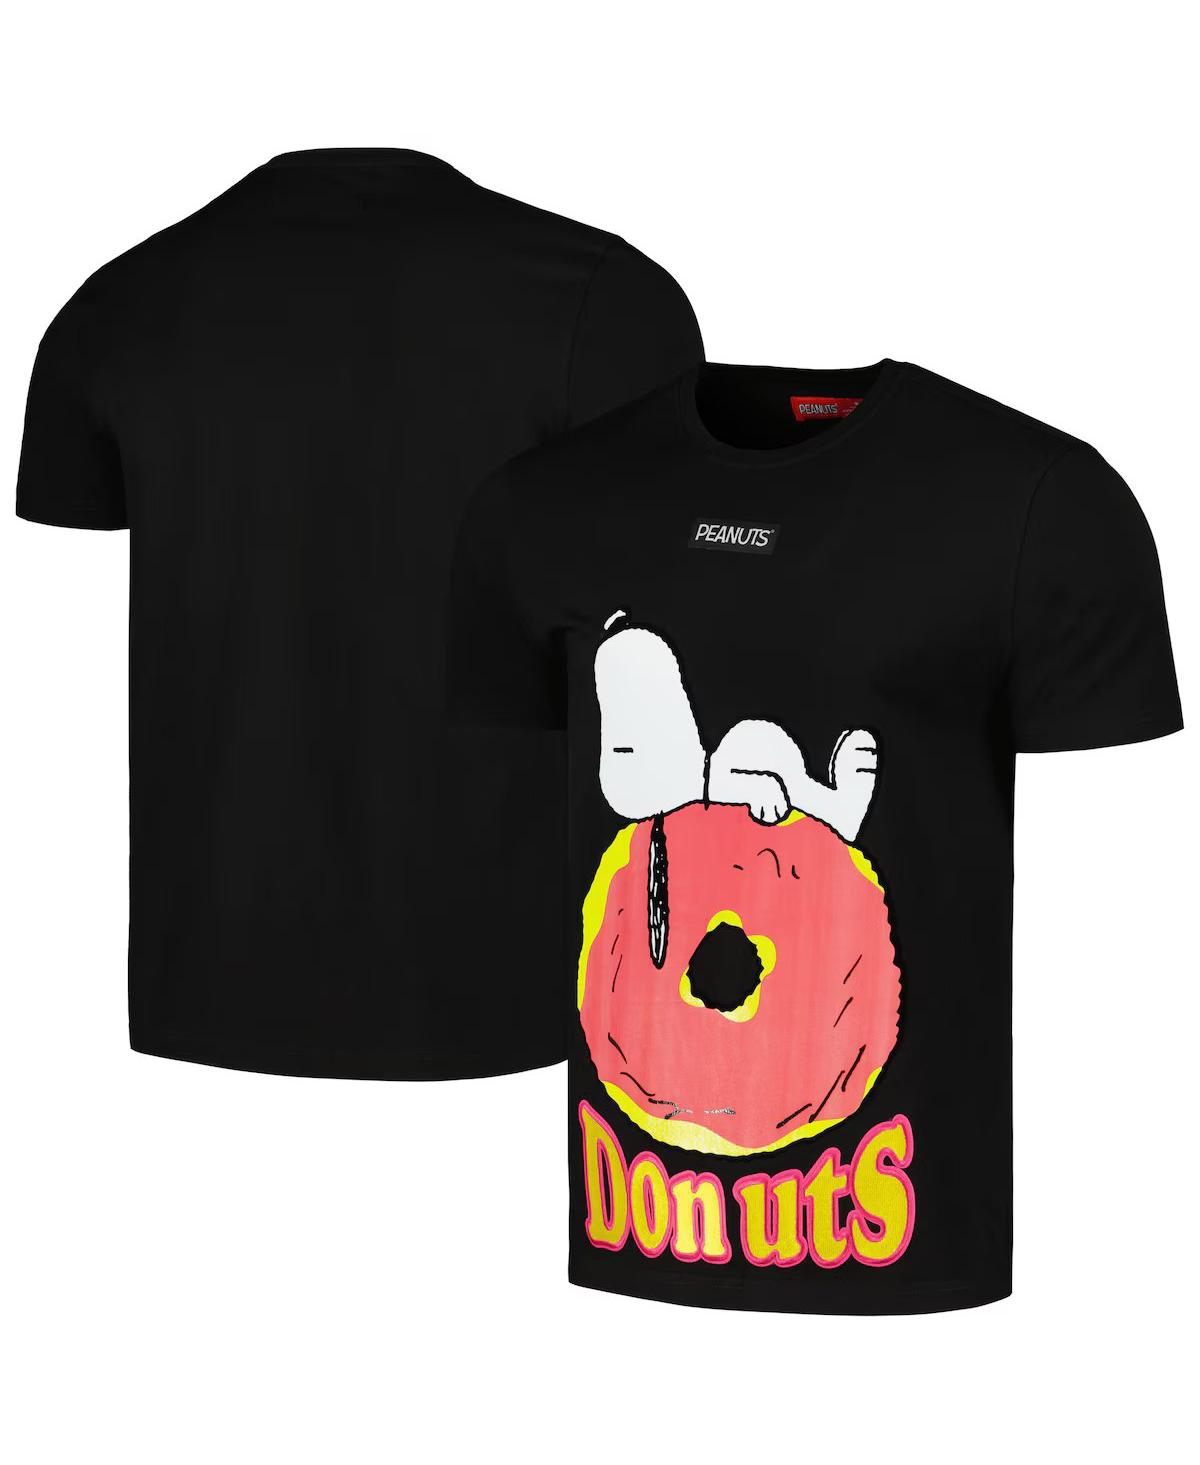 Men's Black Peanuts Snoopy Donuts T-Shirt - Black